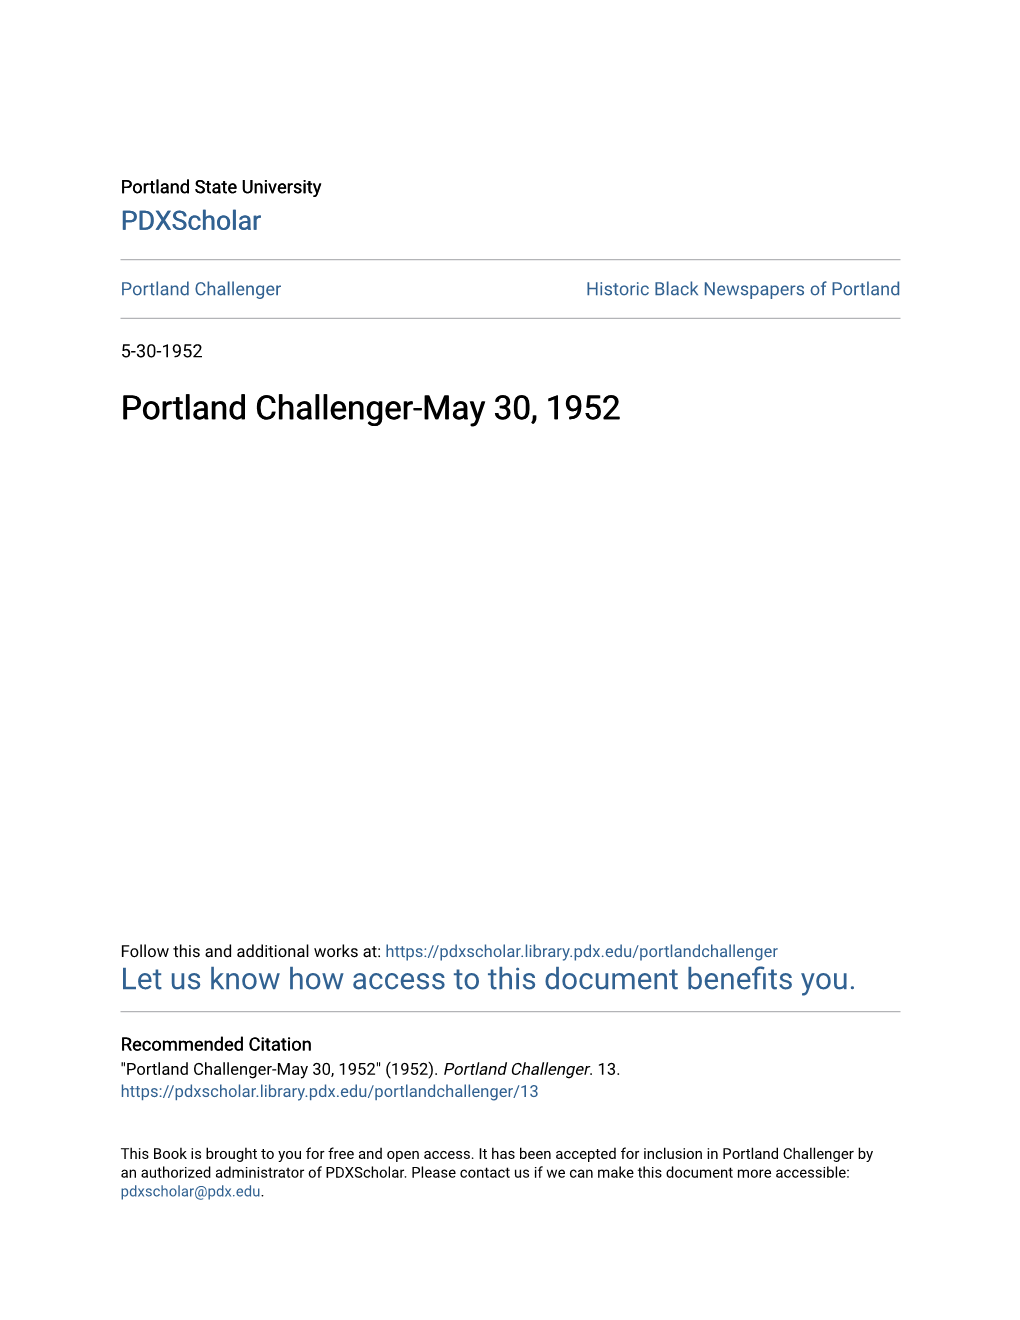 Portland Challenger-May 30, 1952